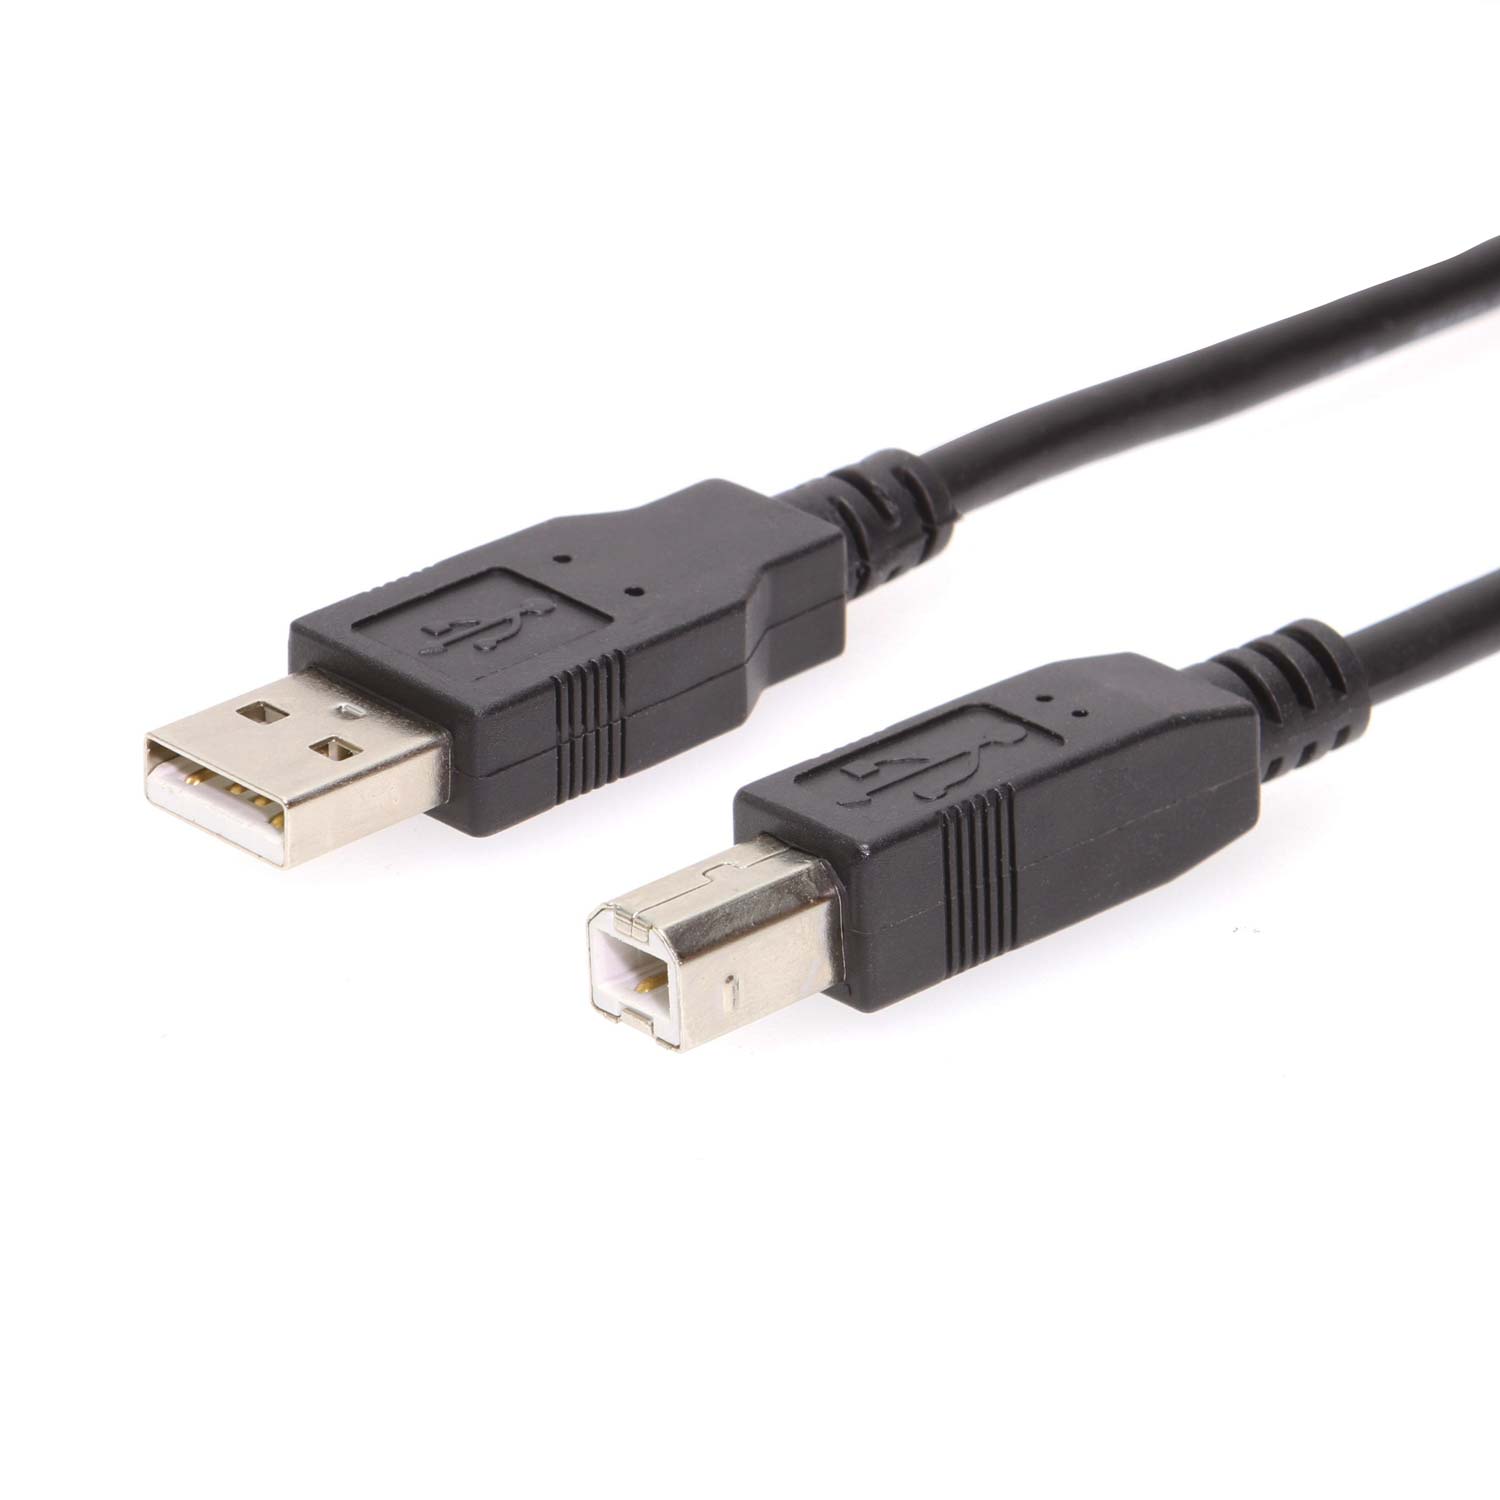 USB Printer Cable USB 2.0 A-B (5 meters) - Fast Data Transfer